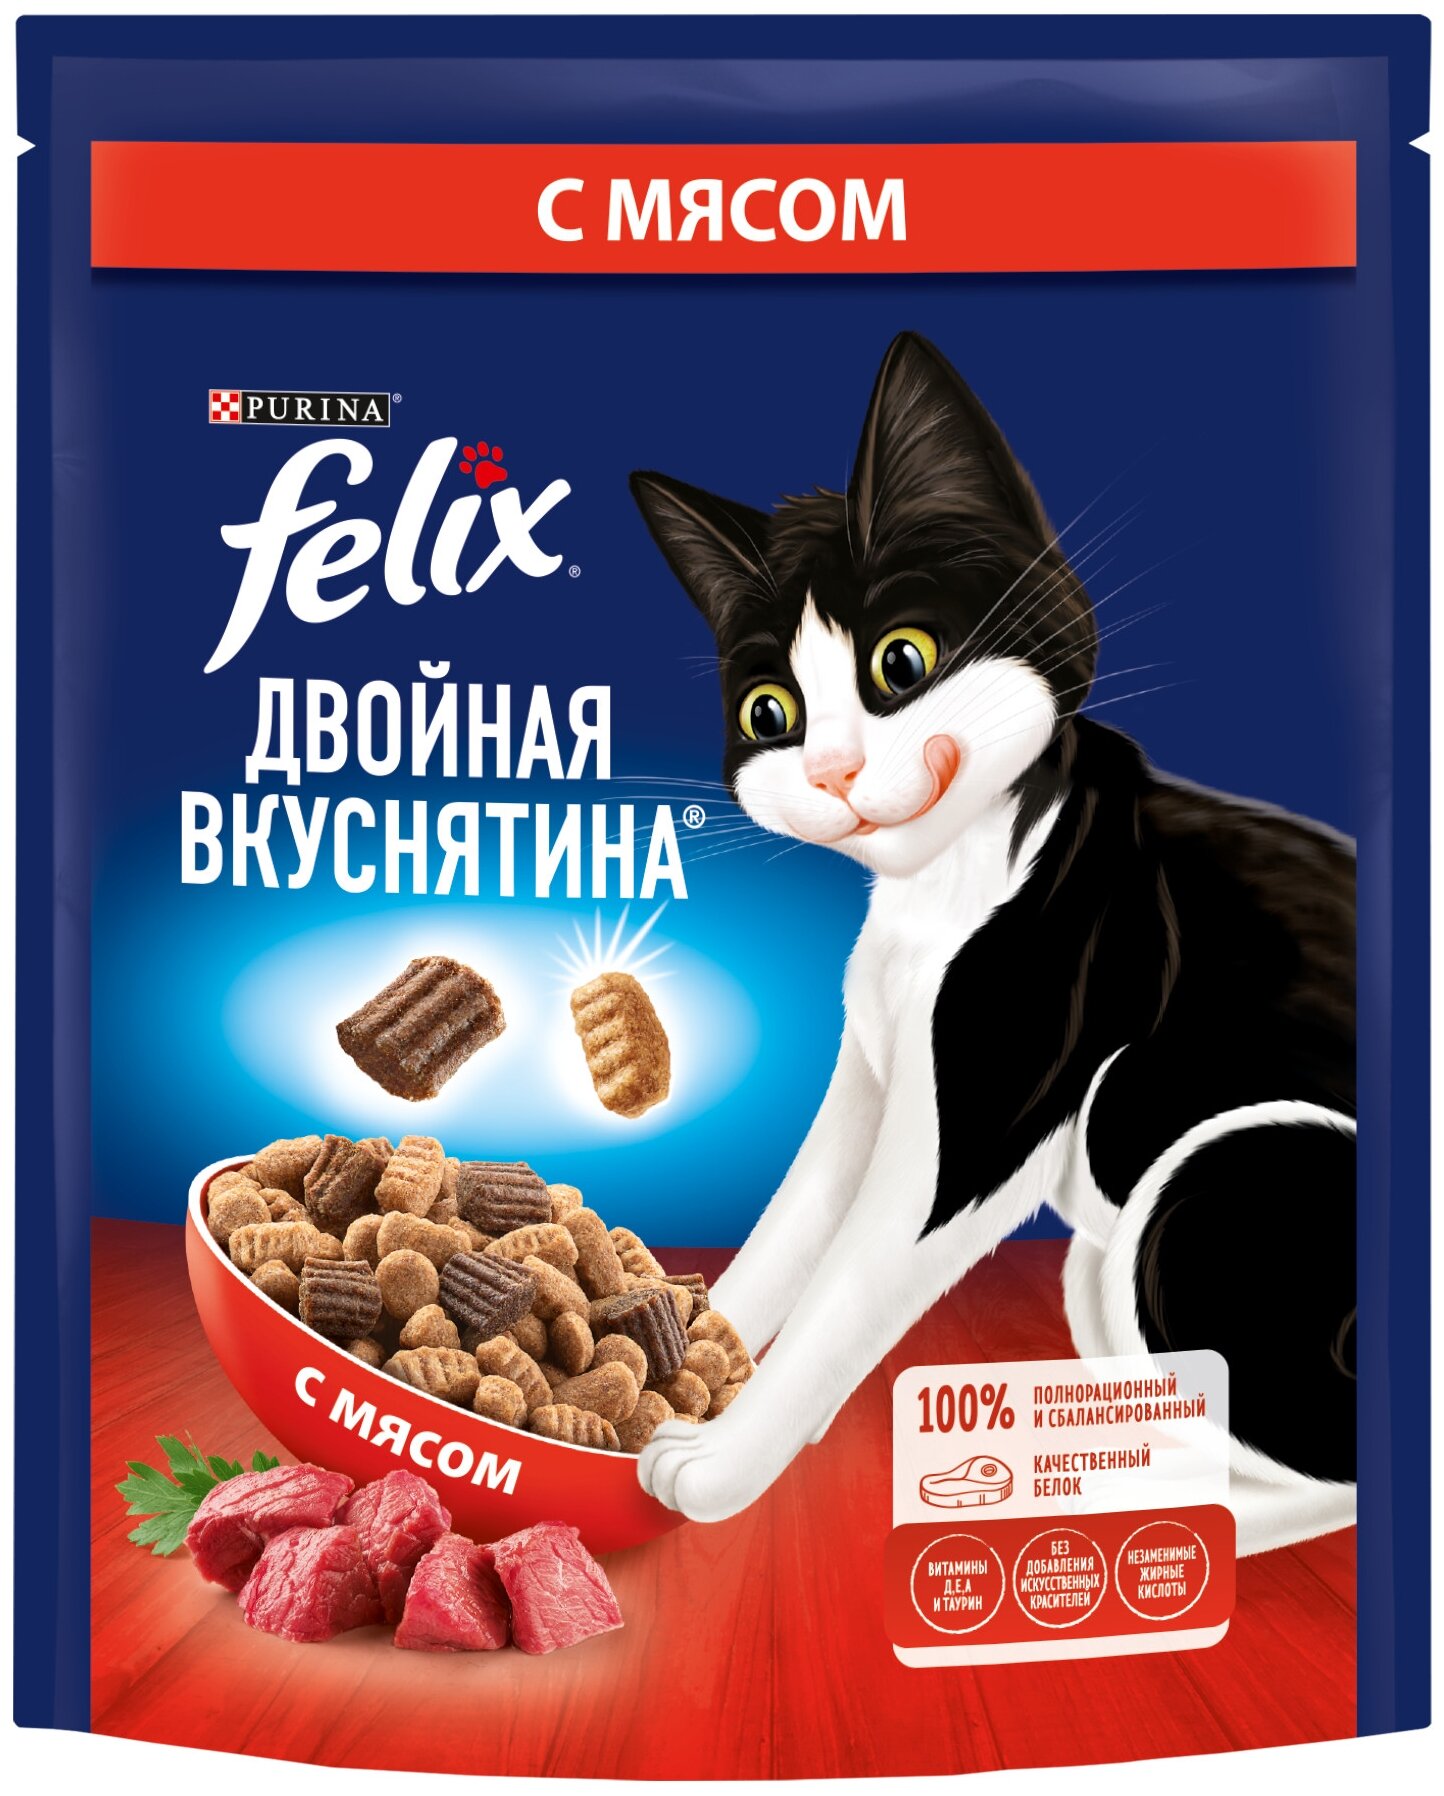 Сухой корм Felix Двойная Вкуснятина для взрослых кошек, с мясом, Пакет, 200г х 3 шт